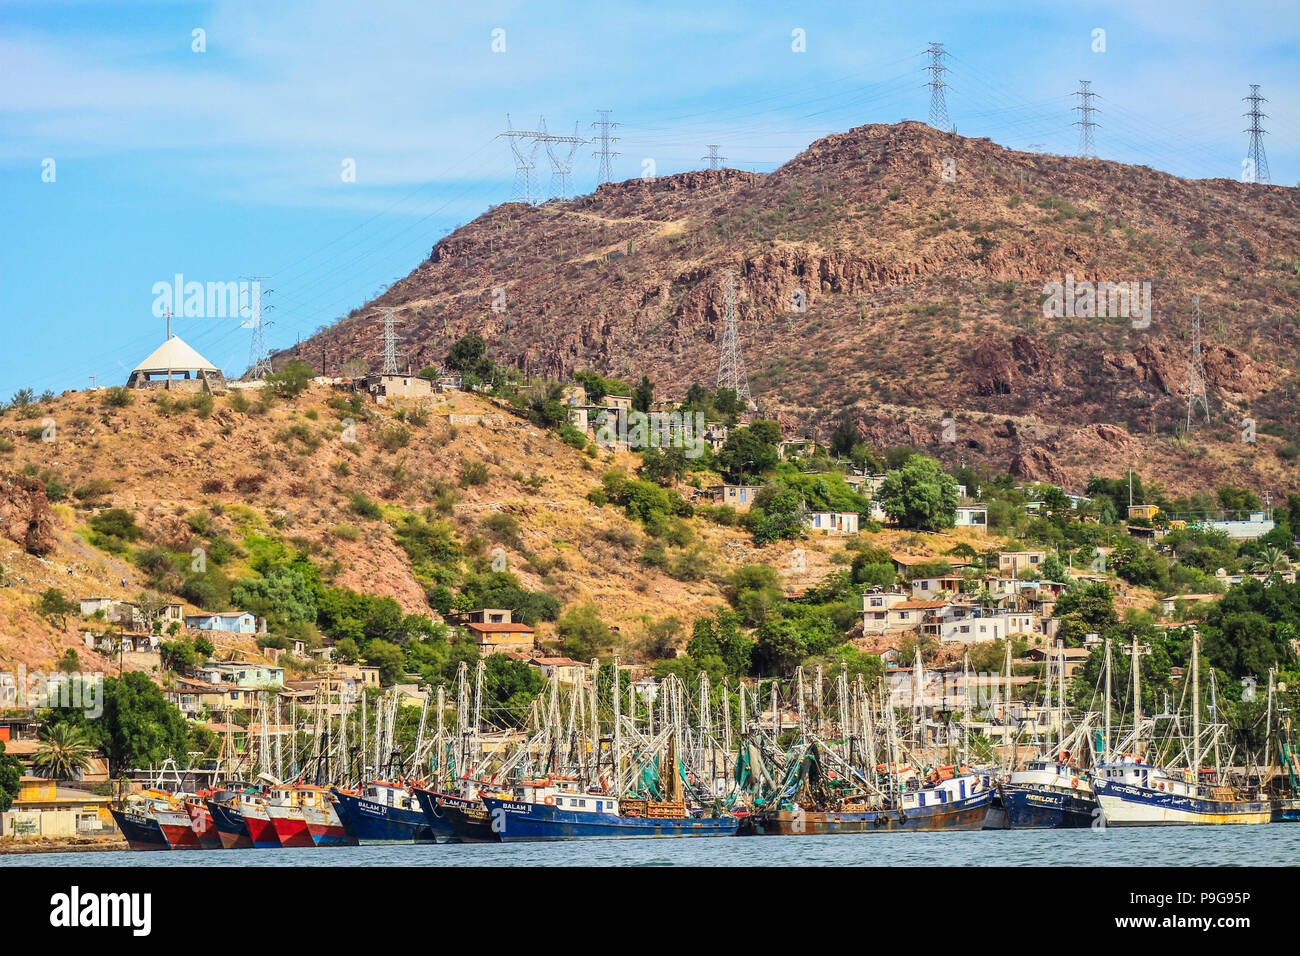 Report of the fishing port of Guaymas Sonora. Reportaje del puerto pesquero de Guaymas Sonora. Stock Photo